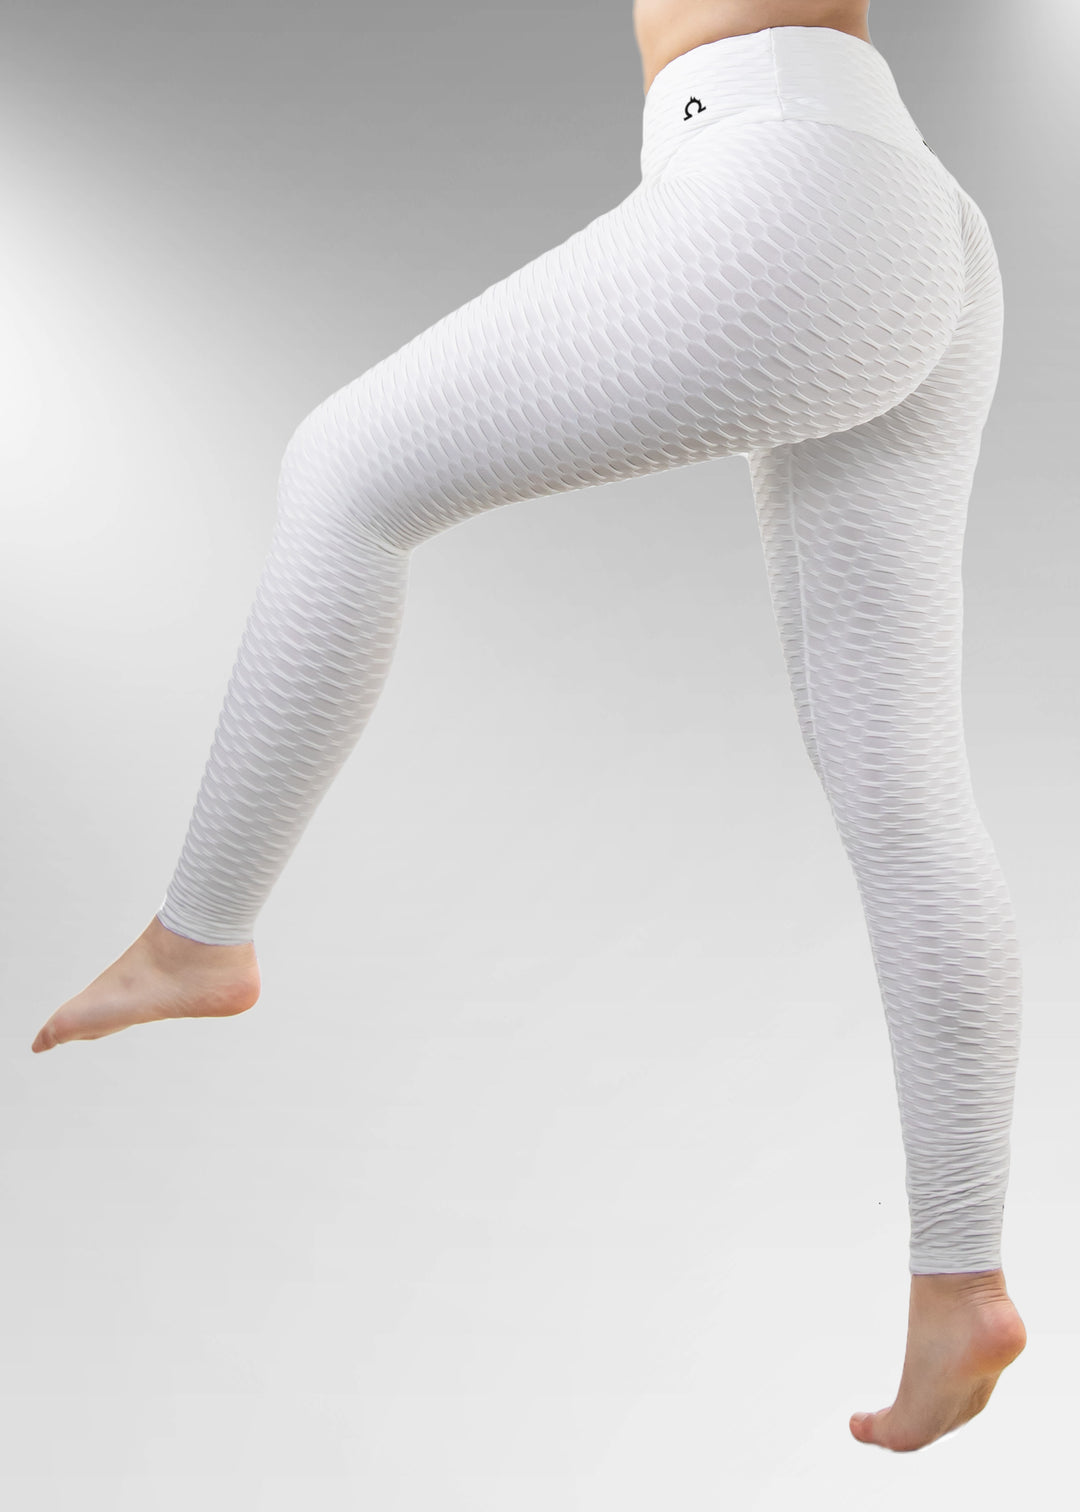 Karlywindow Women's Butt Lifting Legging High Waist Yoga Pants